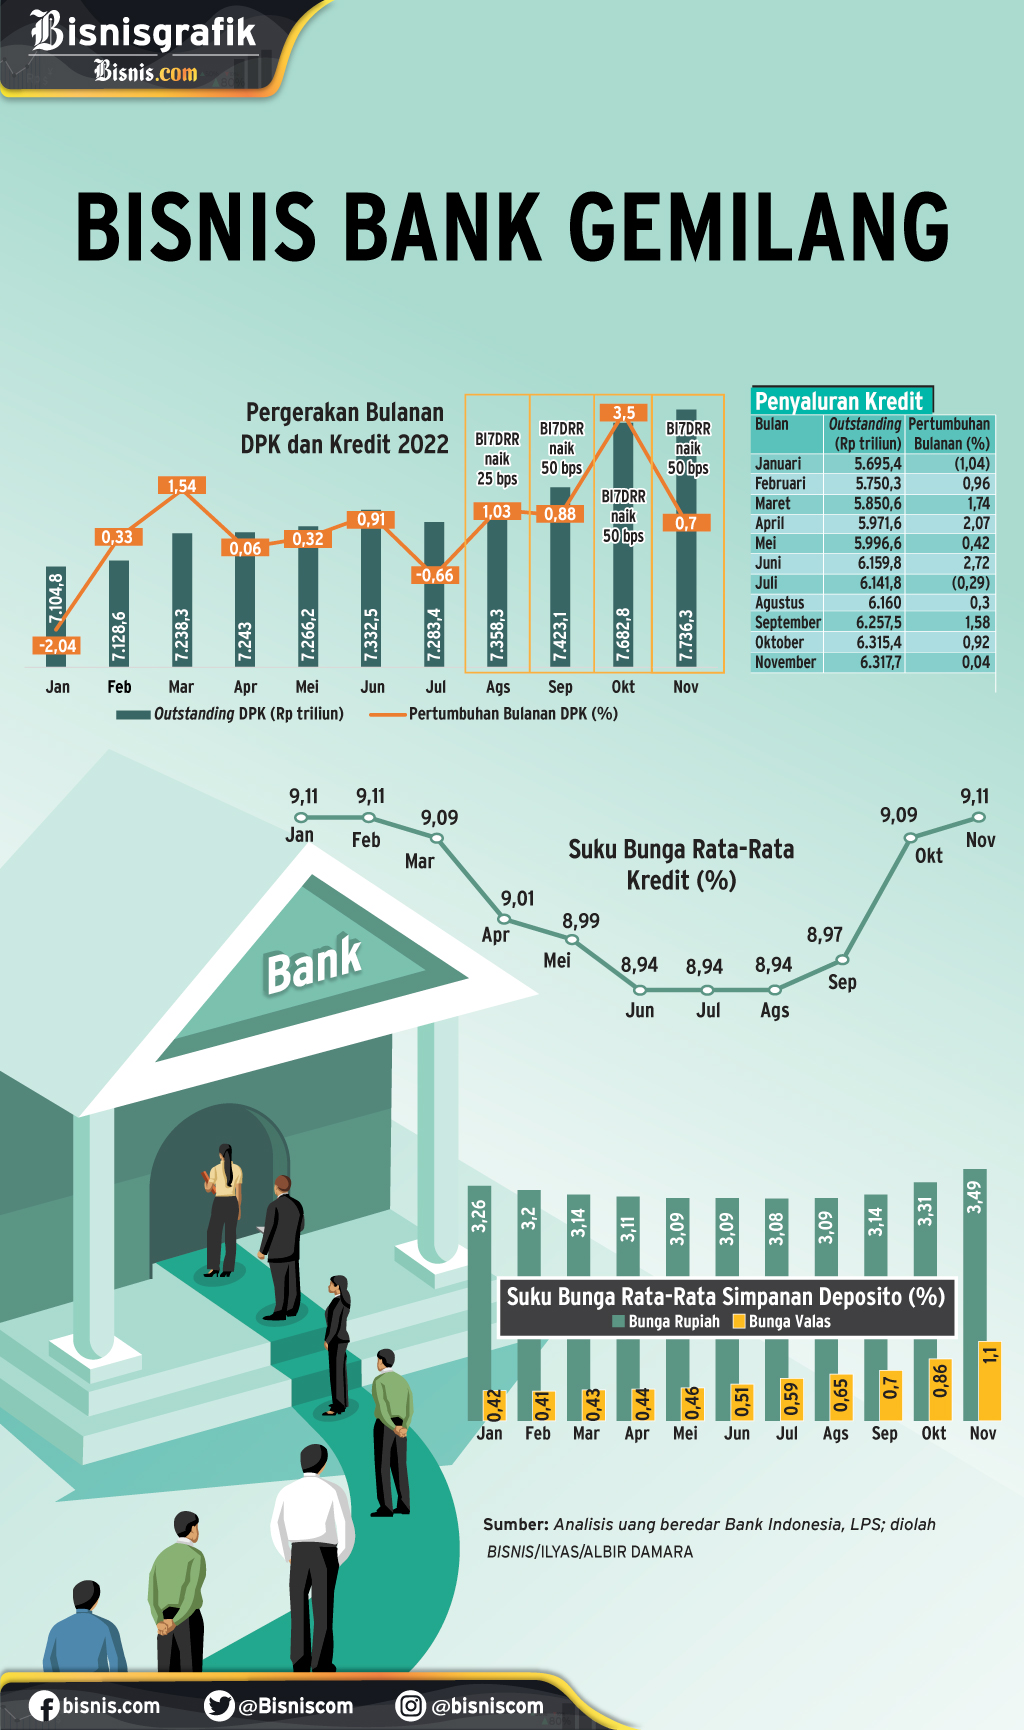 DPK & PENYALURAN KREDIT : Bisnis Bank Gemilang